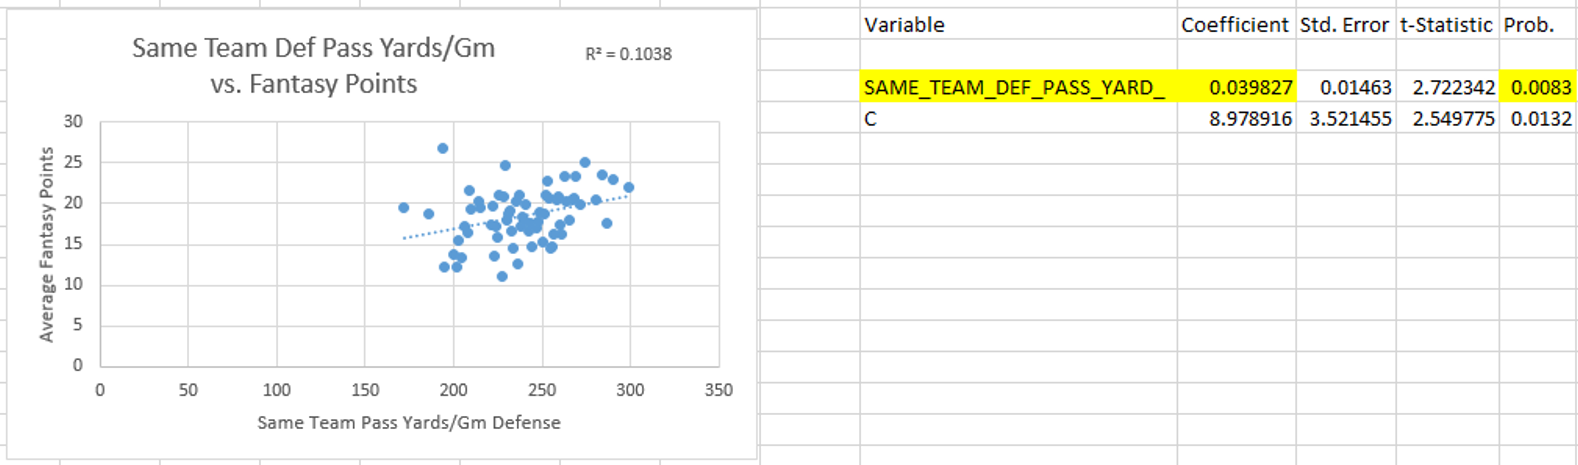 stats_same-team-def-pass-yards